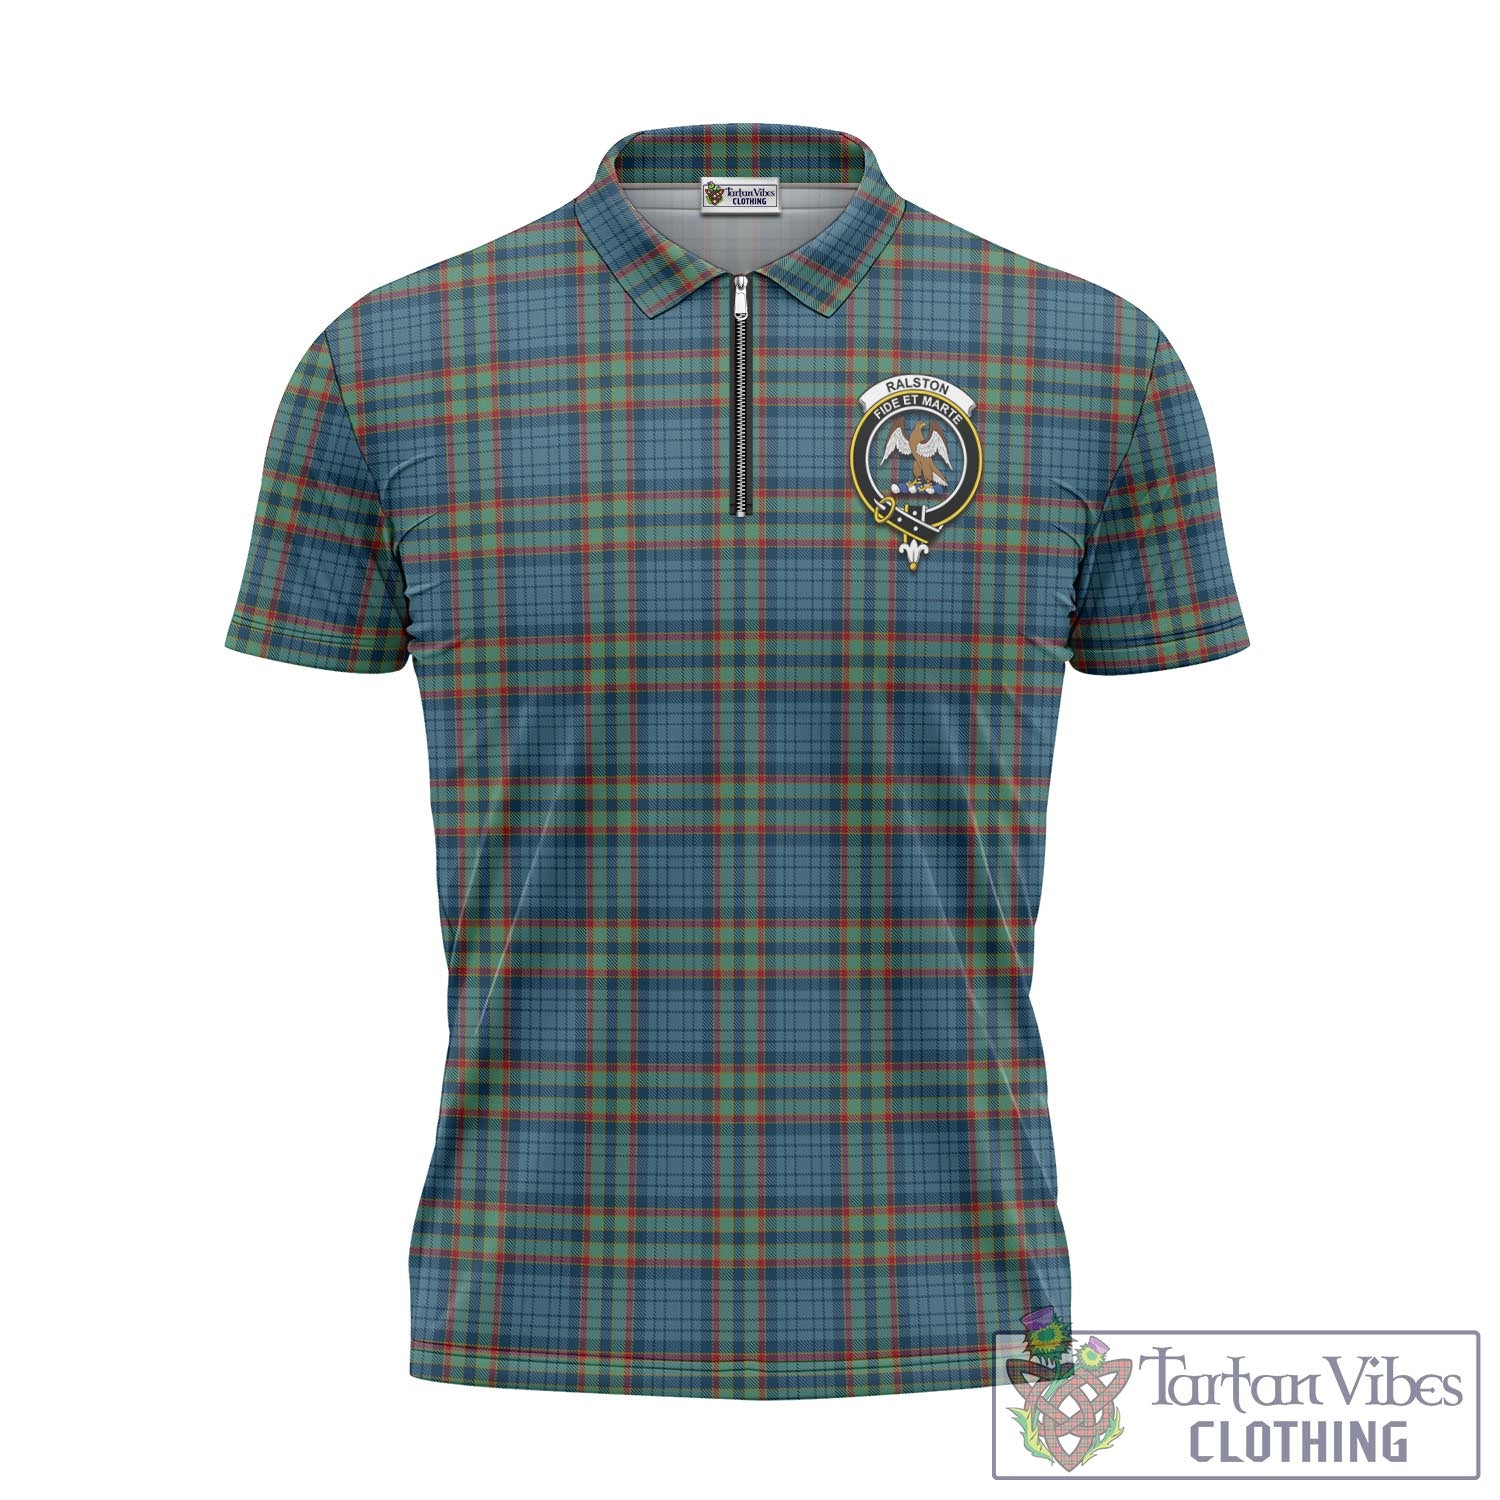 Tartan Vibes Clothing Ralston UK Tartan Zipper Polo Shirt with Family Crest